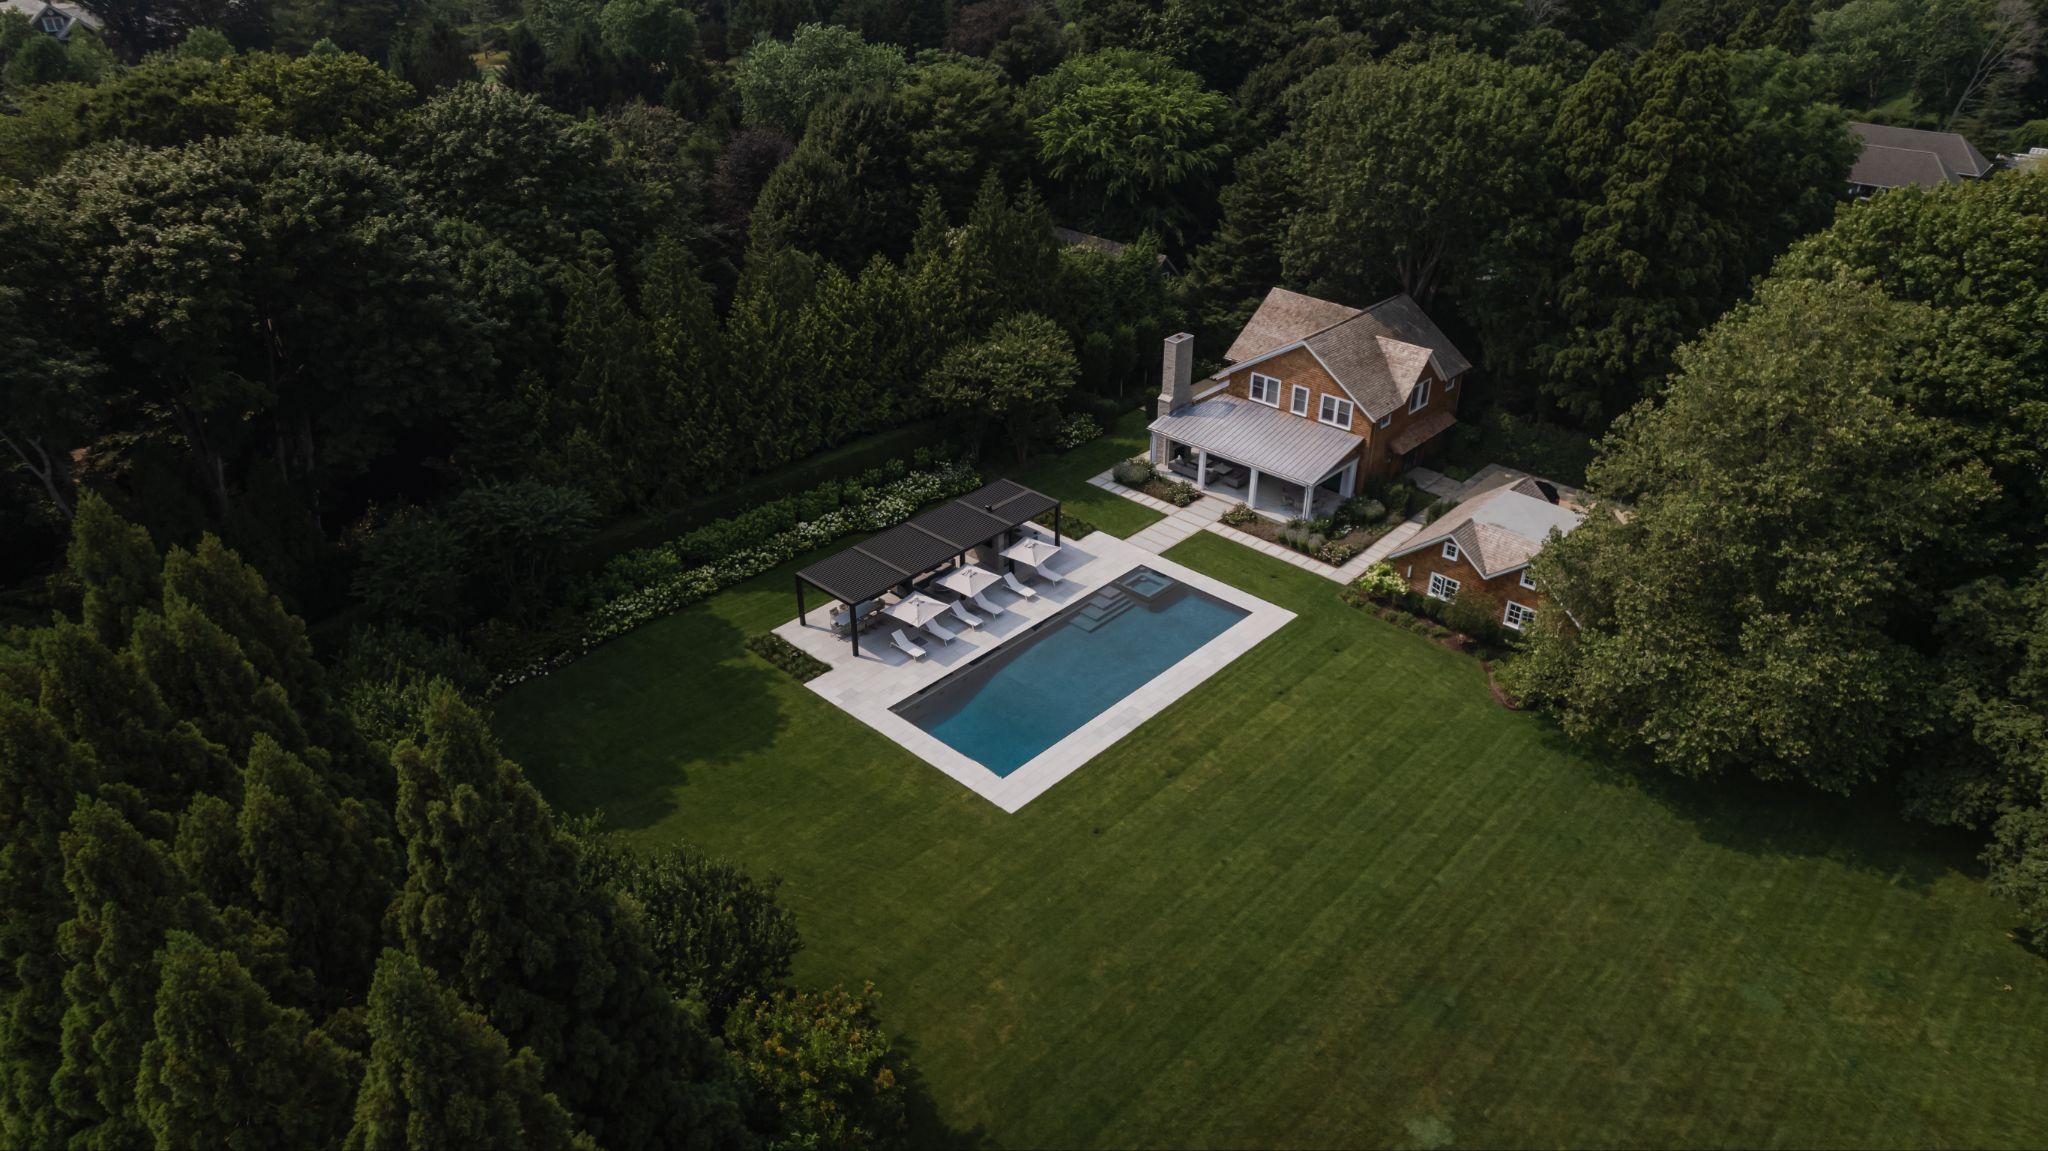 10 Stunning Pool Designs That Will Inspire Your Backyard Oasis Htm B6ff8de1d9c0ba9b